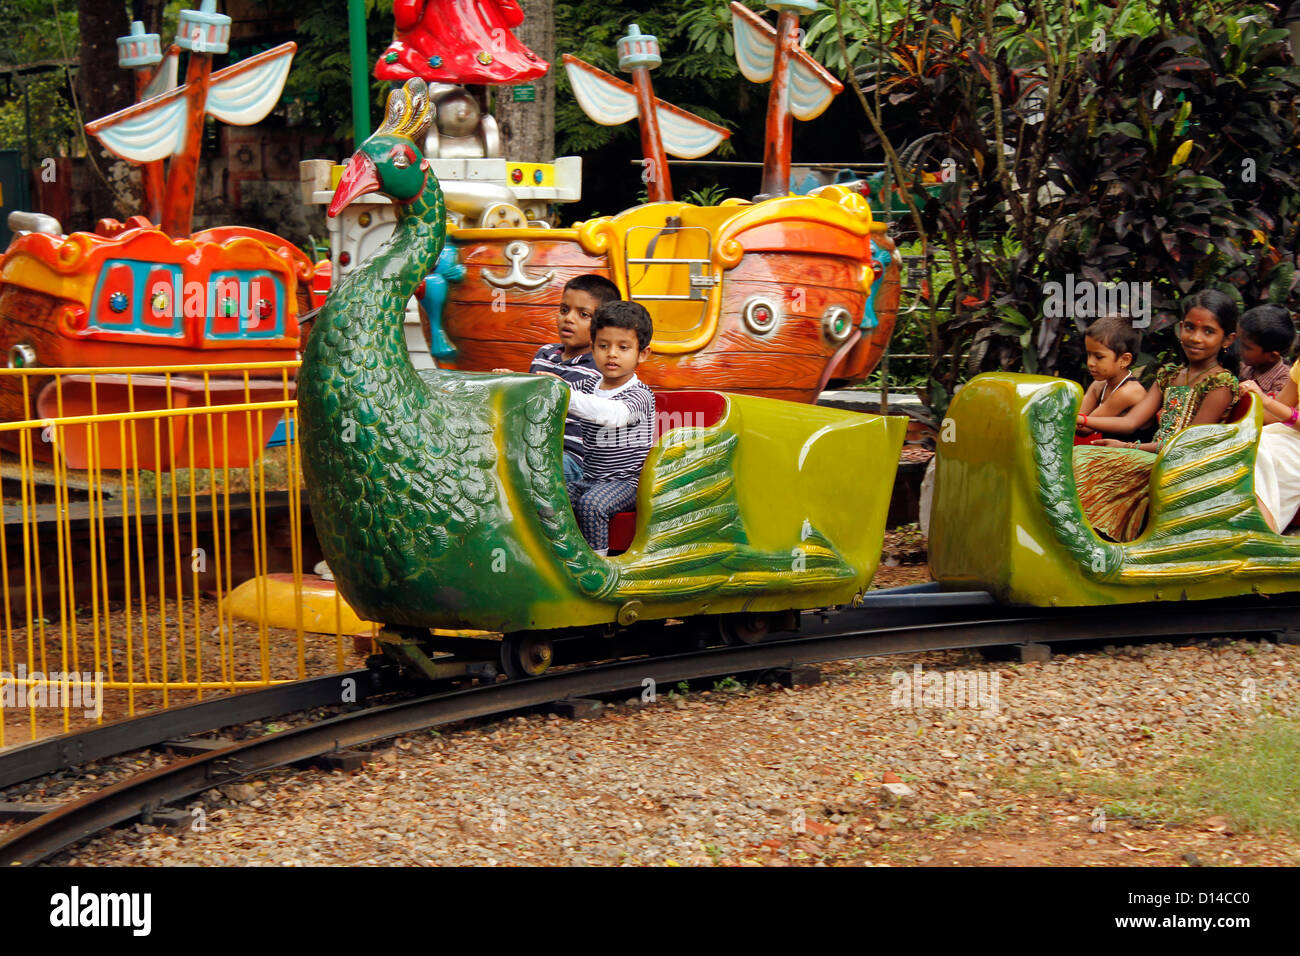 children in a train in a park, india Stock Photo